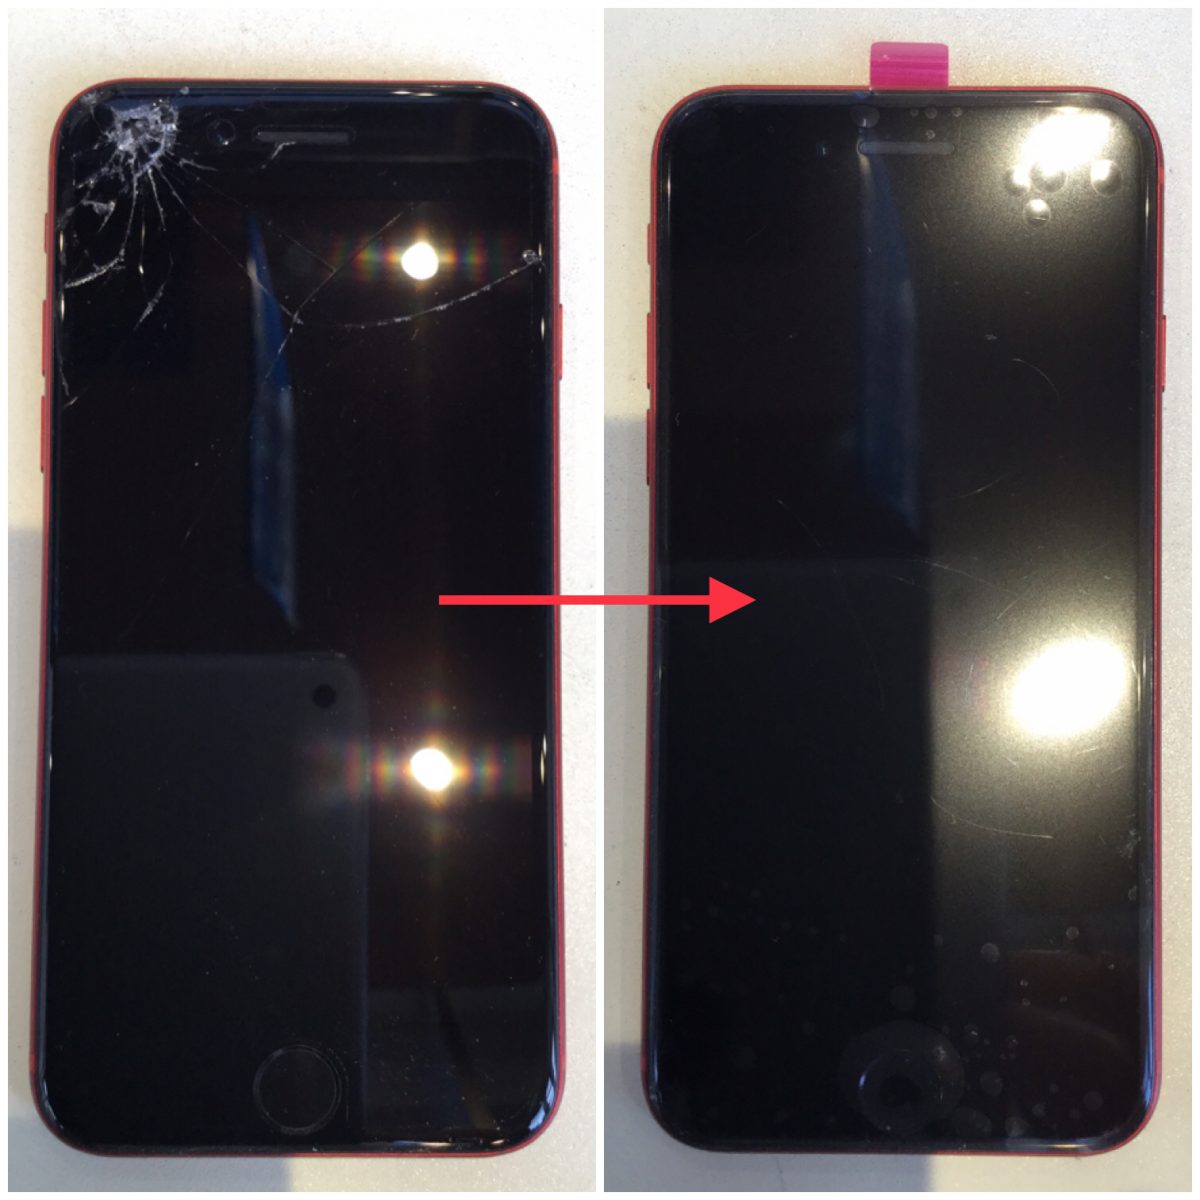 iPhone SE (第2世代) 修理サービス - iPhone修理のiCracked【総務省 